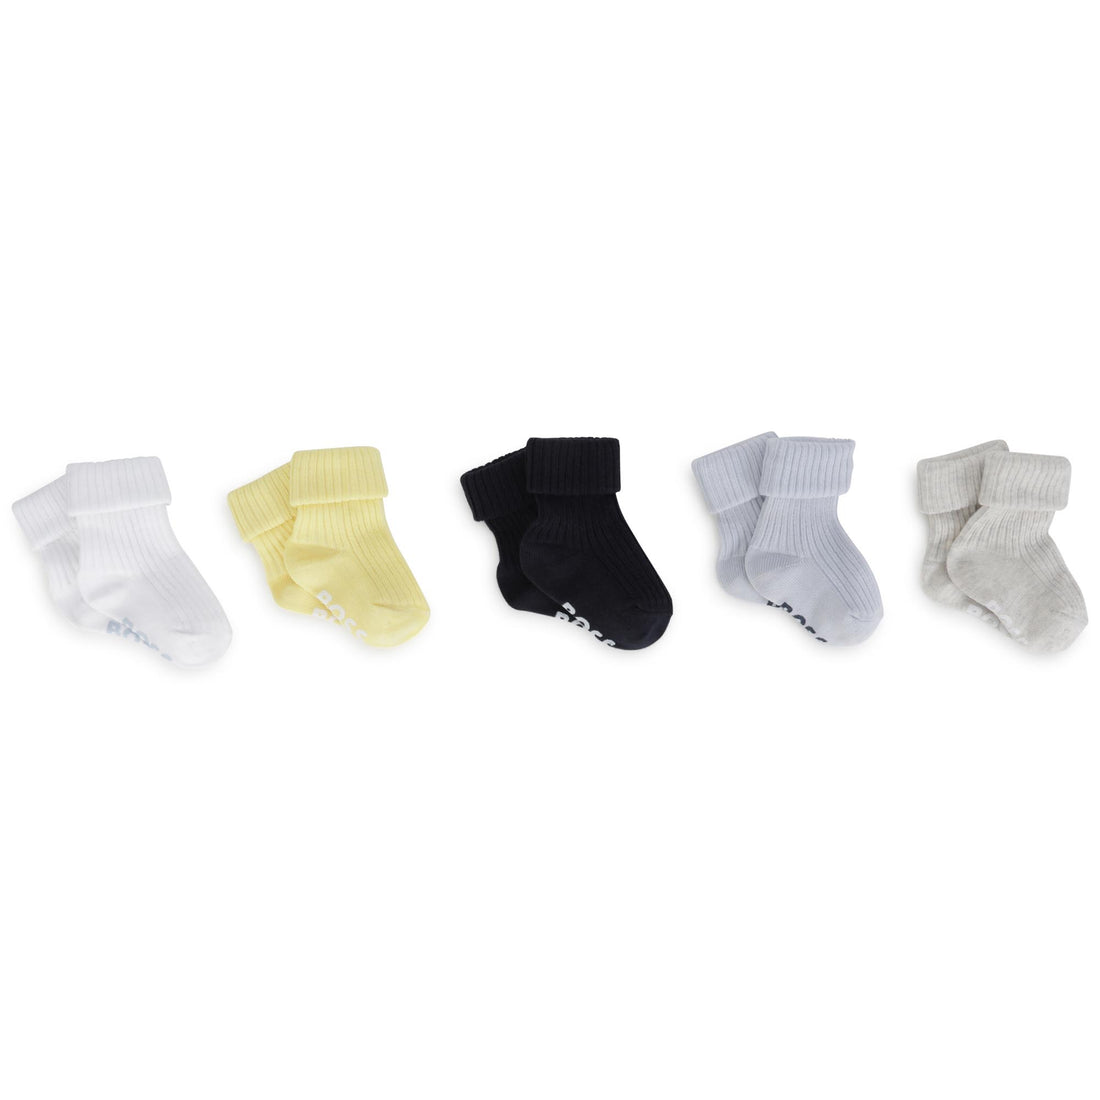 Hugo Boss Diary Set of 5 Pairs of Socks Style: J90315